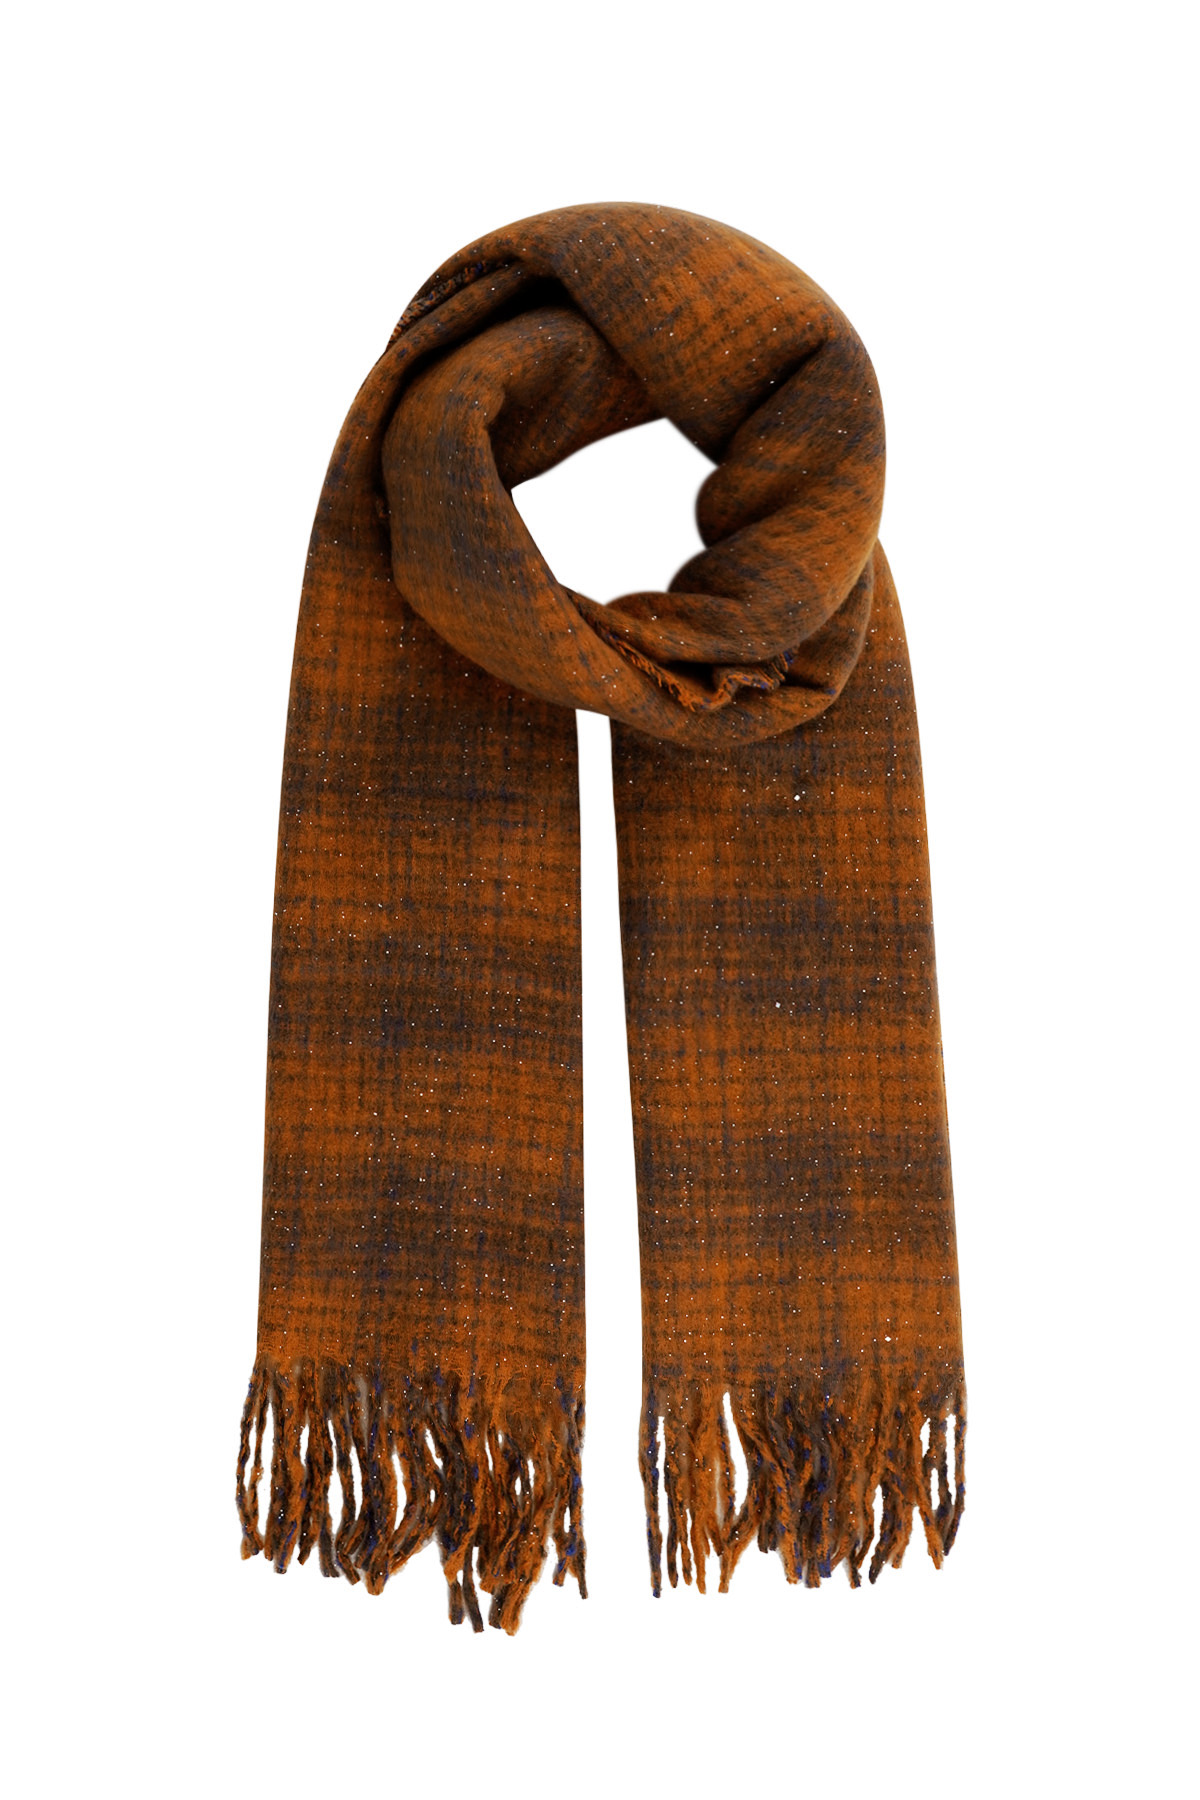 Calda sciarpa invernale a quadri - arancione h5 